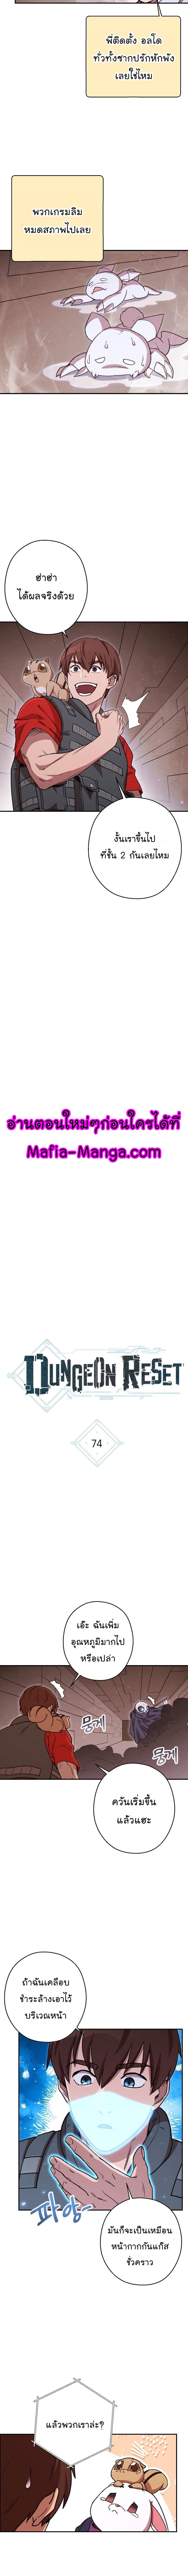 Dungeon Reset74 02